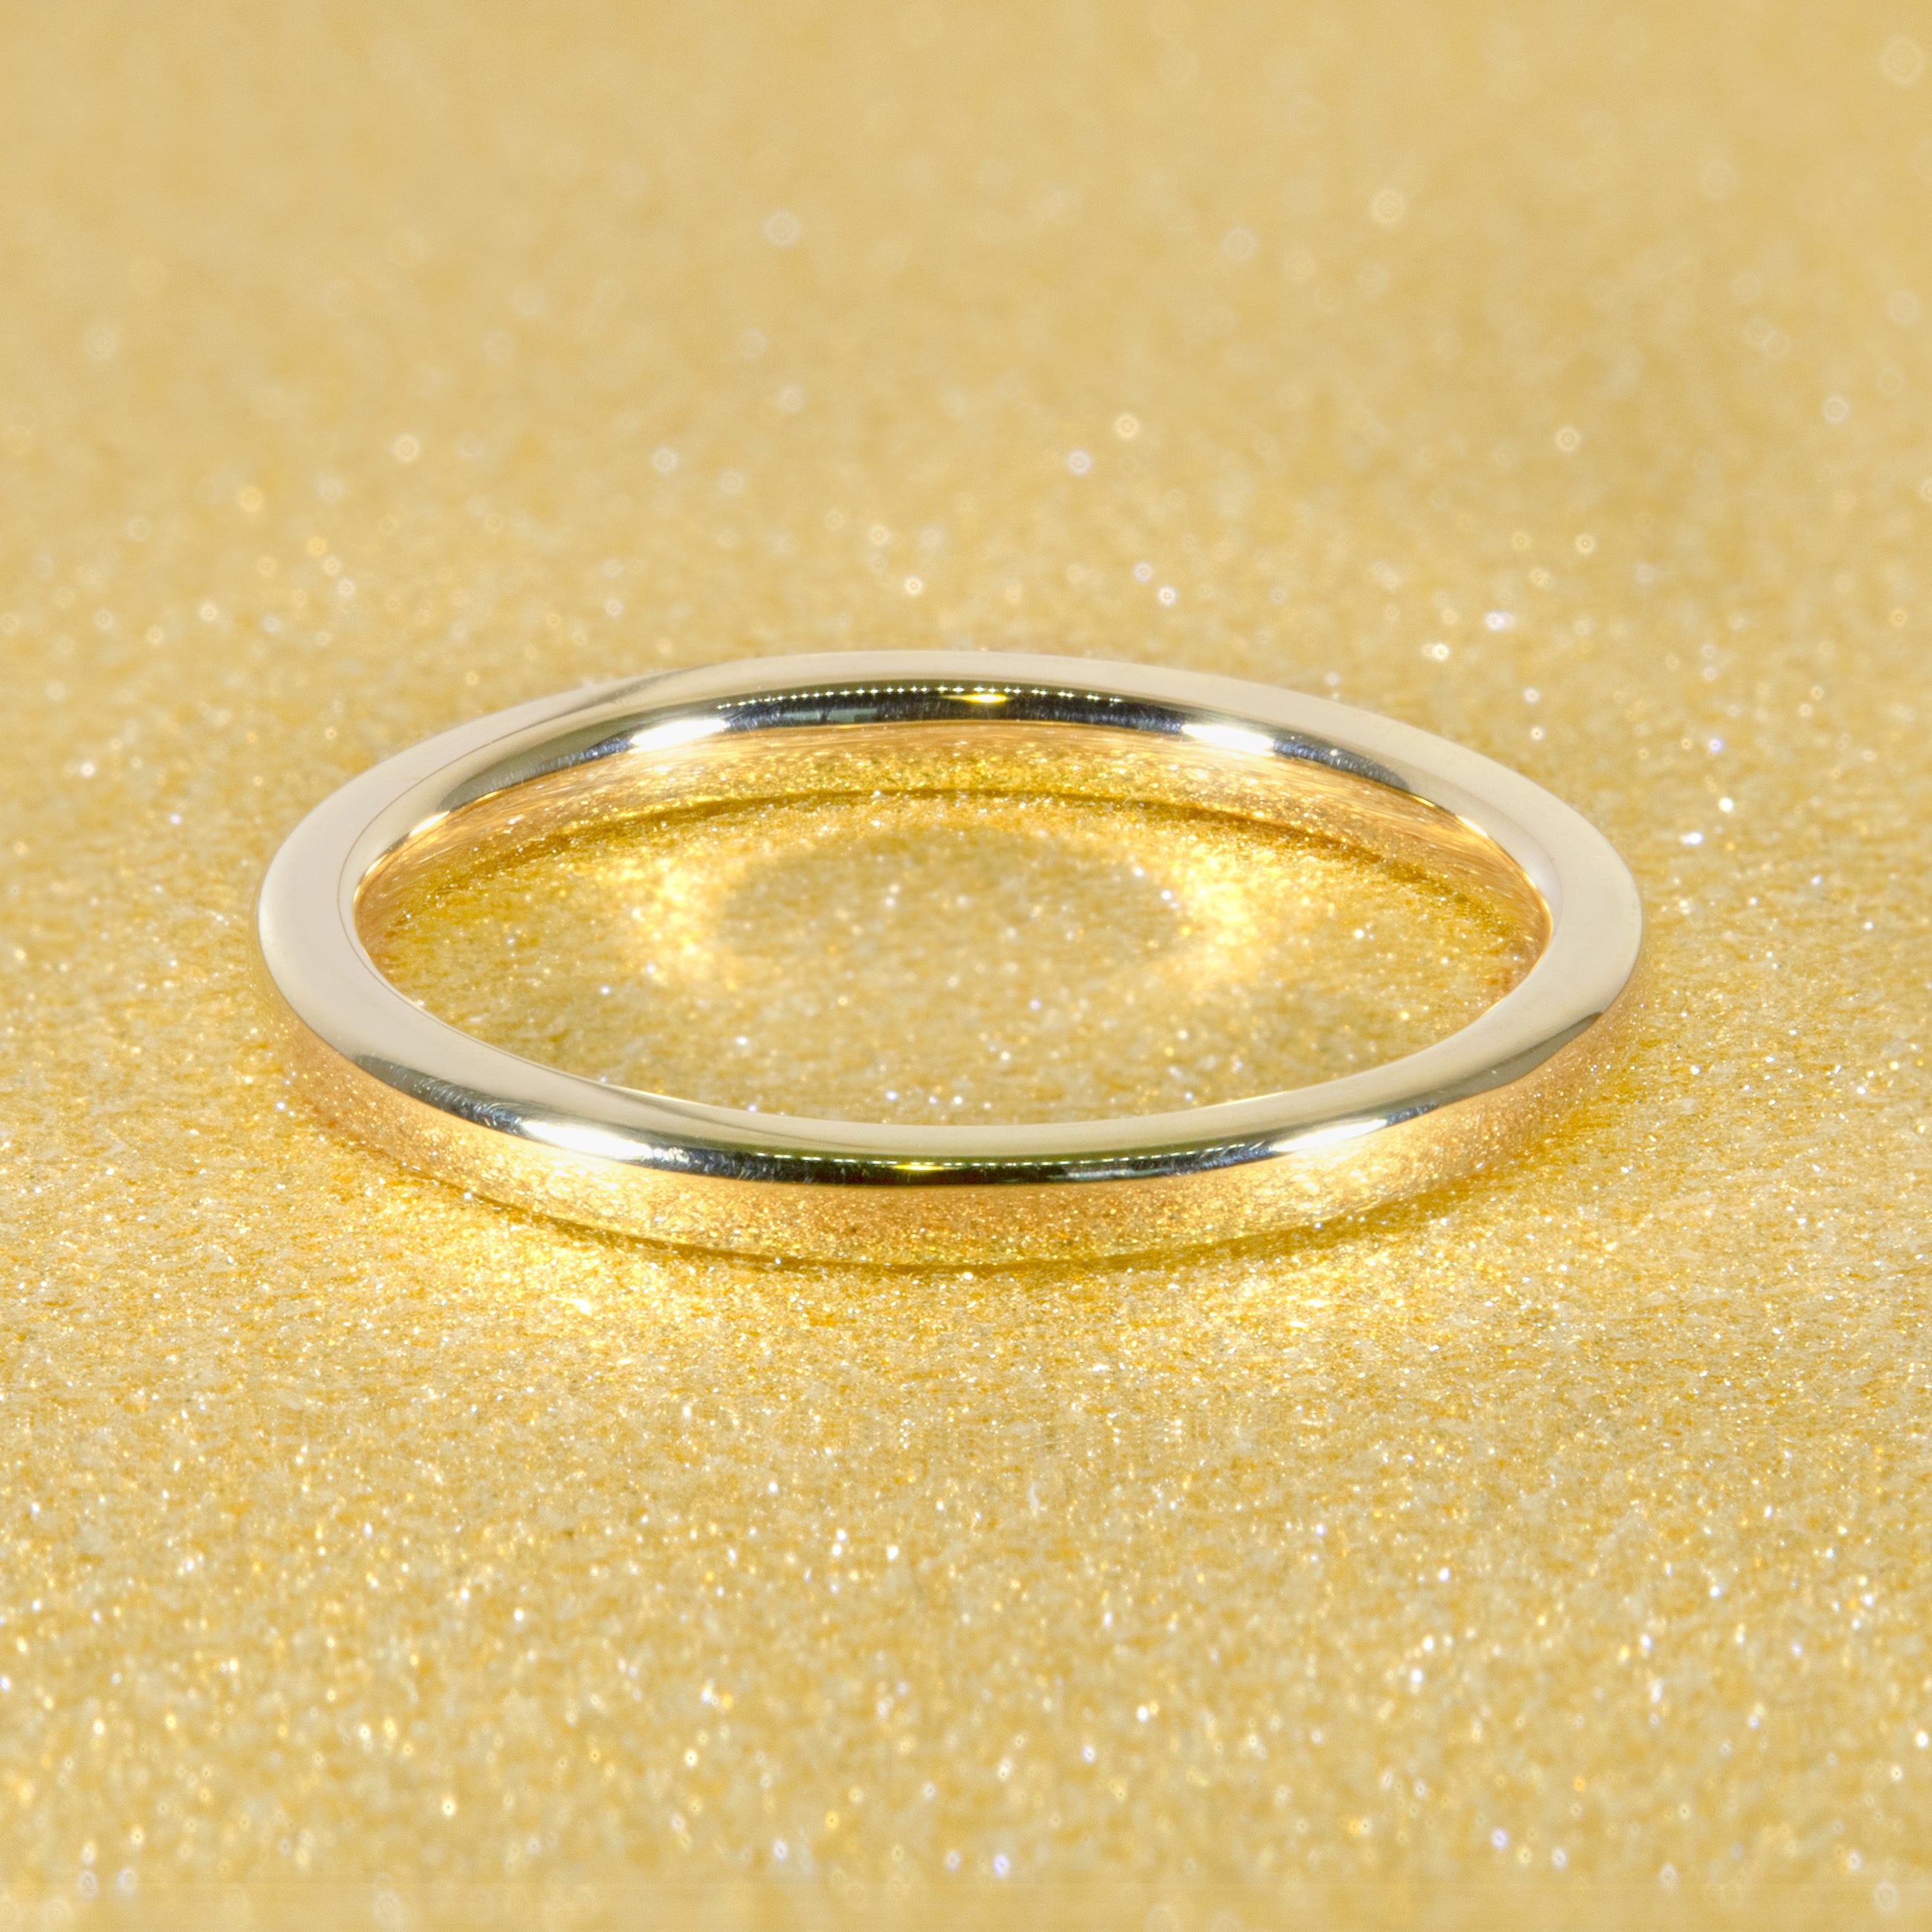 Minimalistic and simplistic solid gold wedding band.